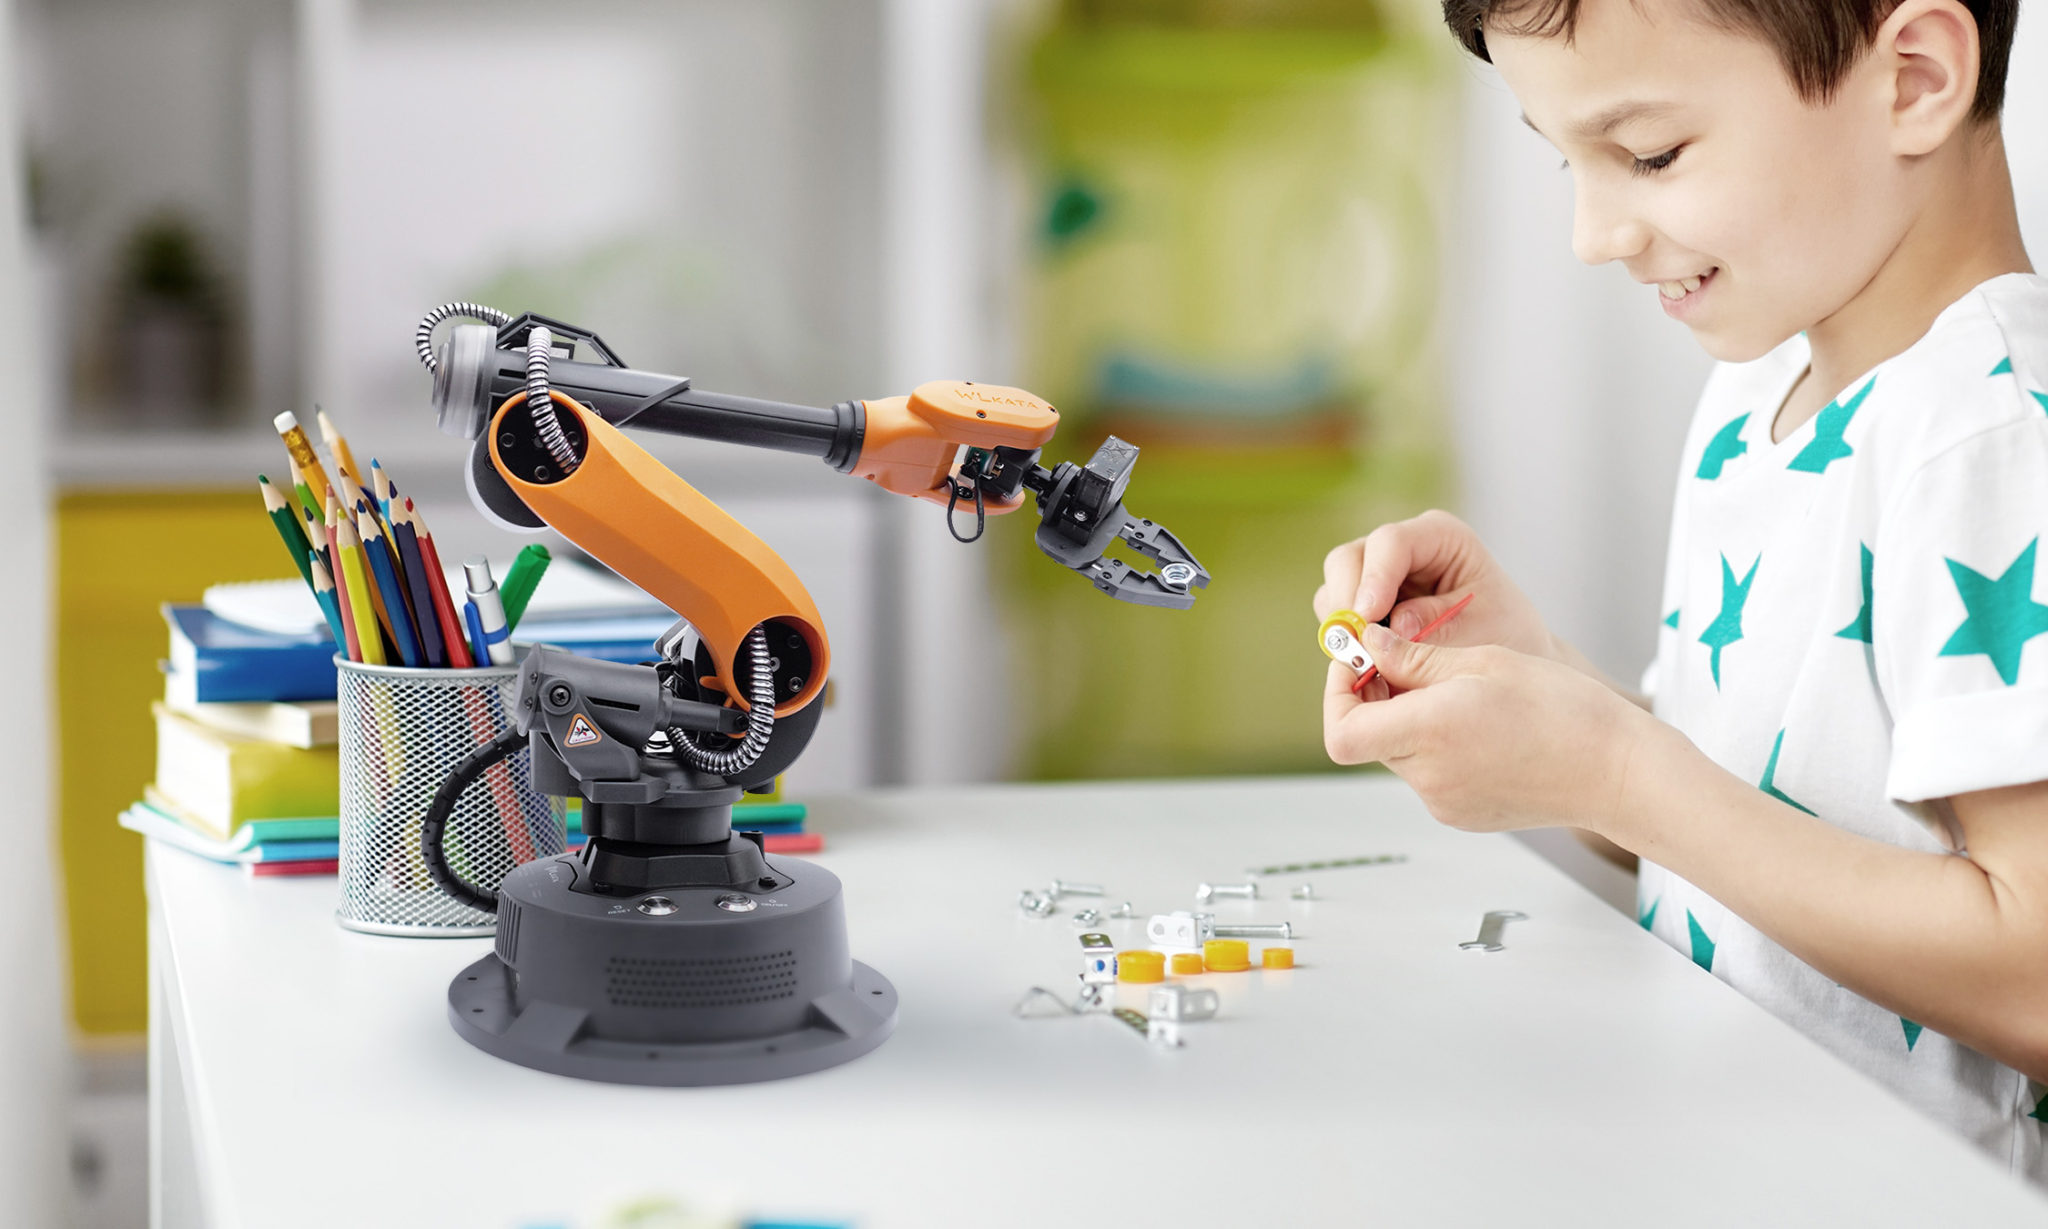 robotics education business model